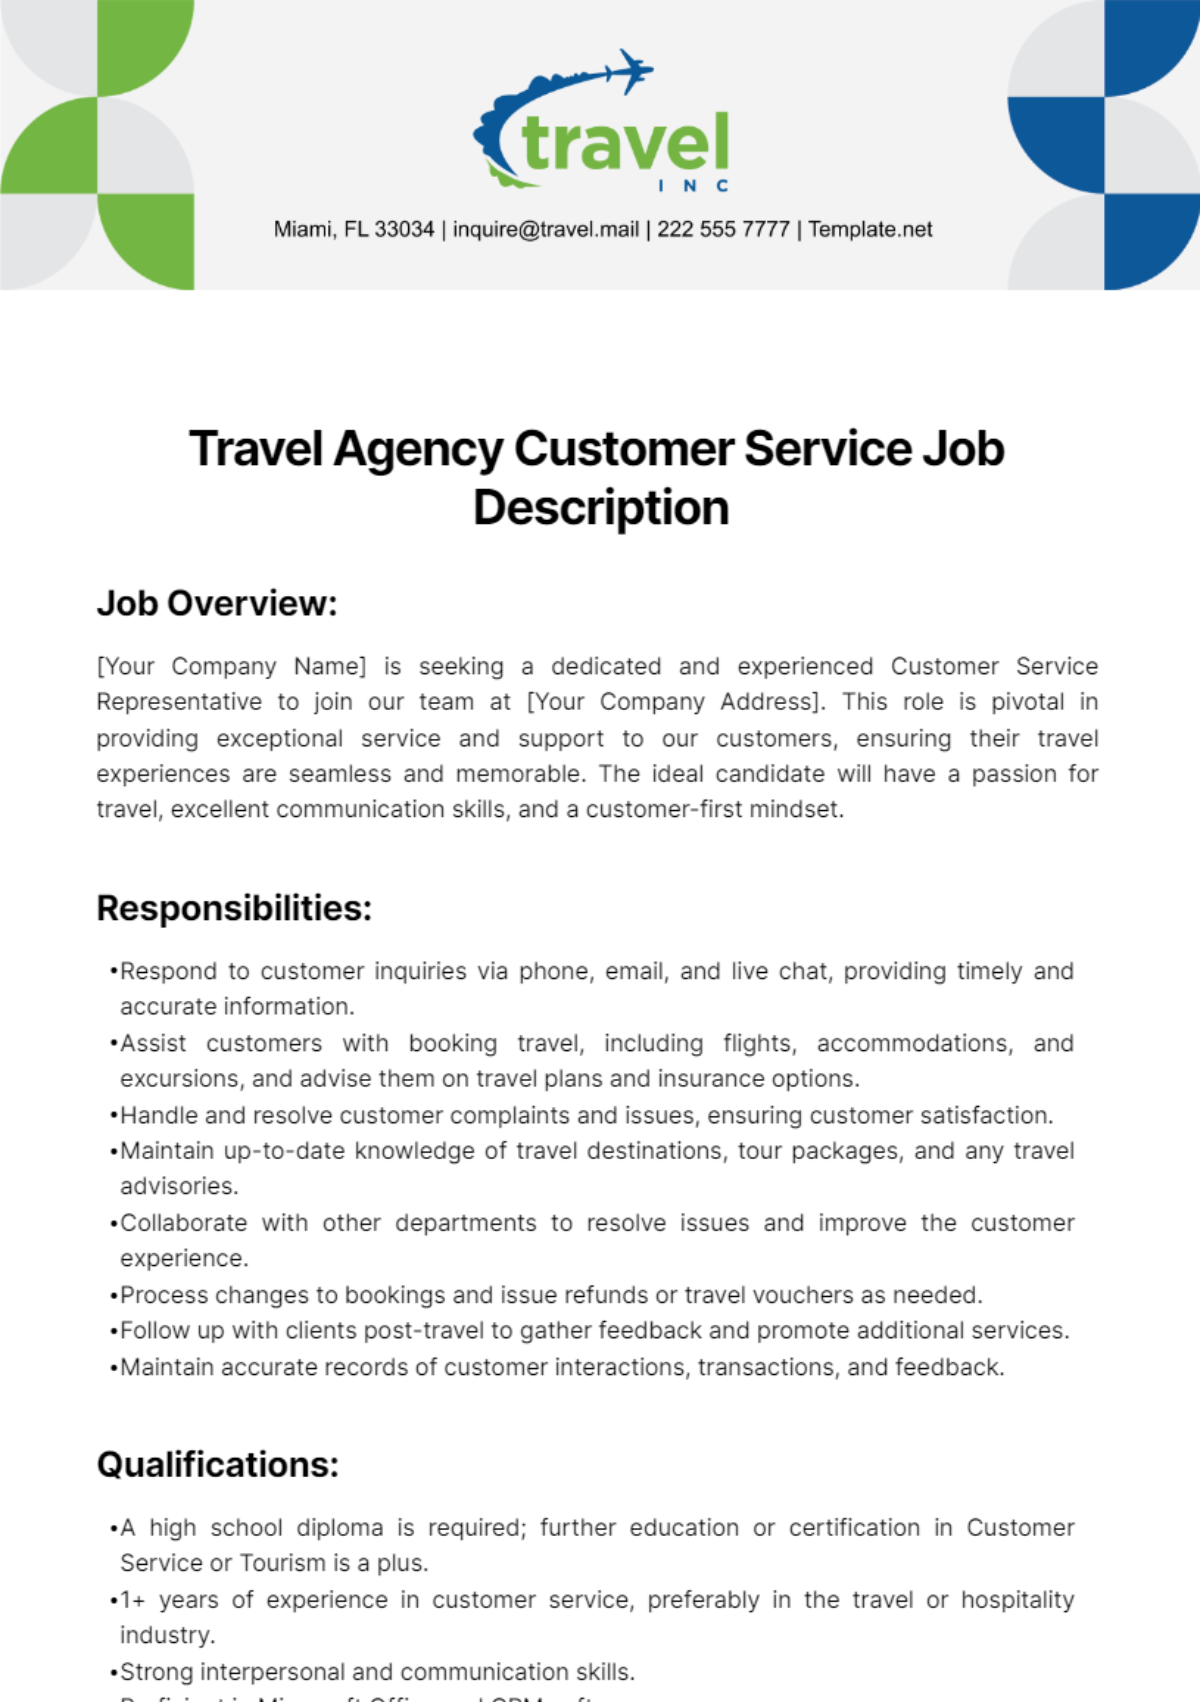 Free Travel Agency Customer Service Job Description Template